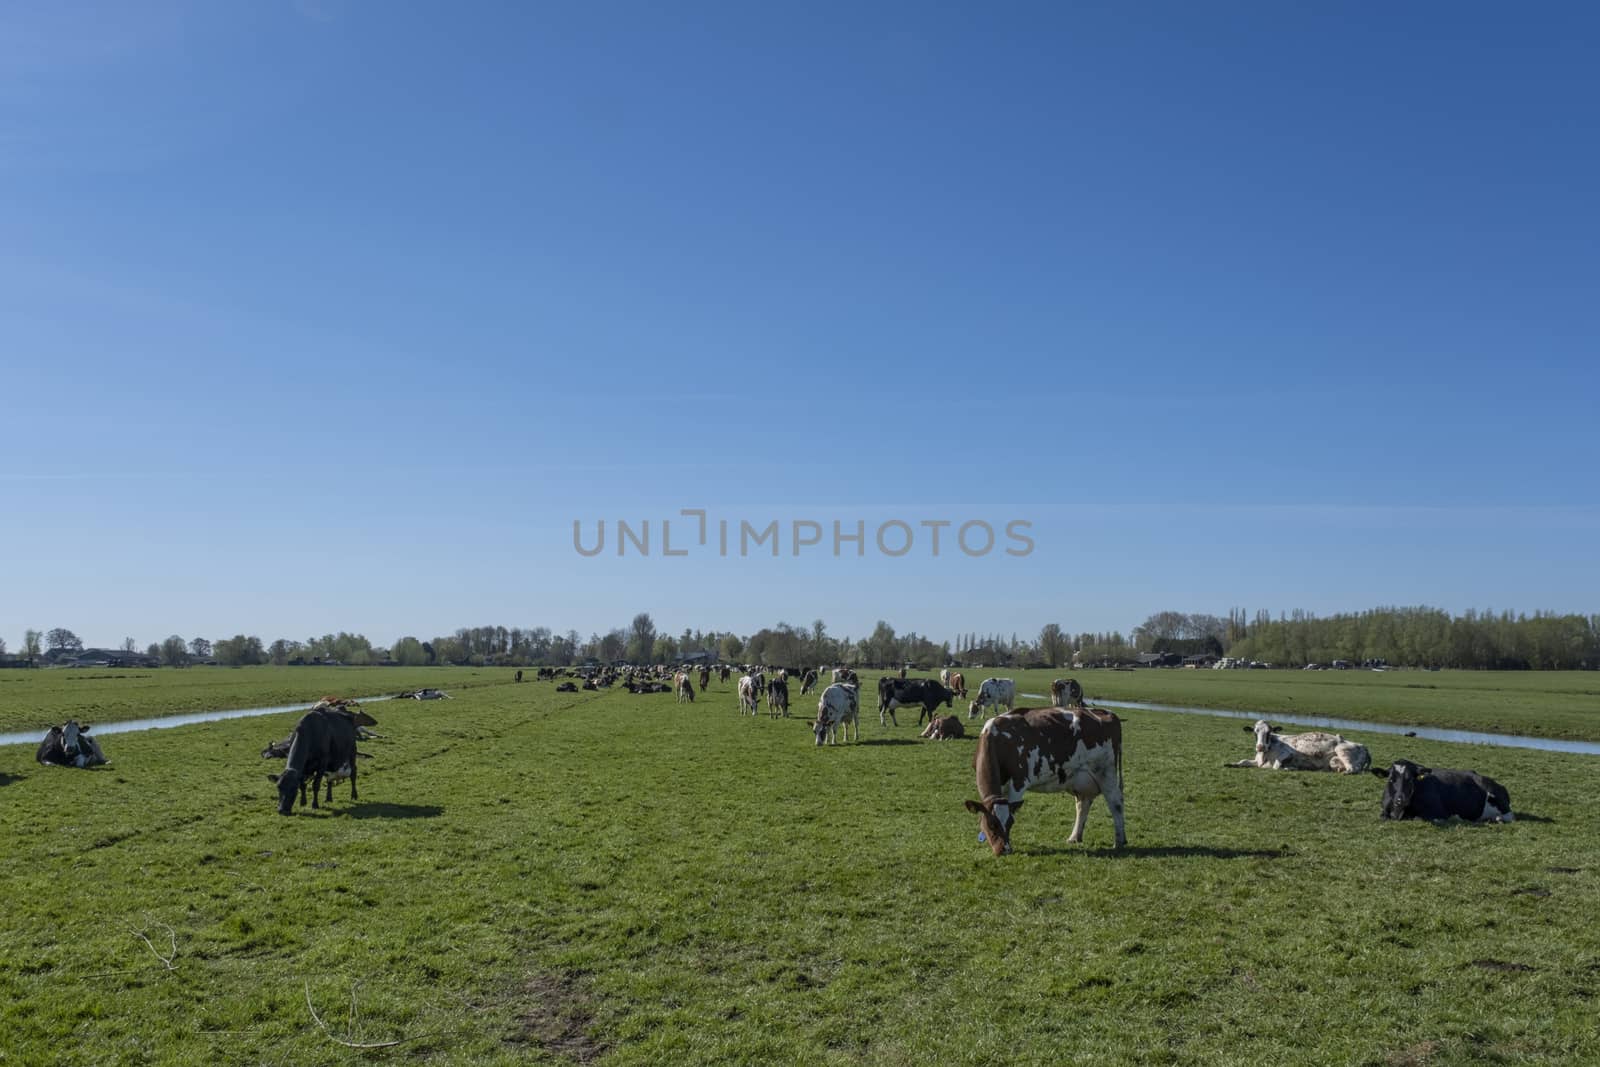 Dutch cows in a typical Dutch setting